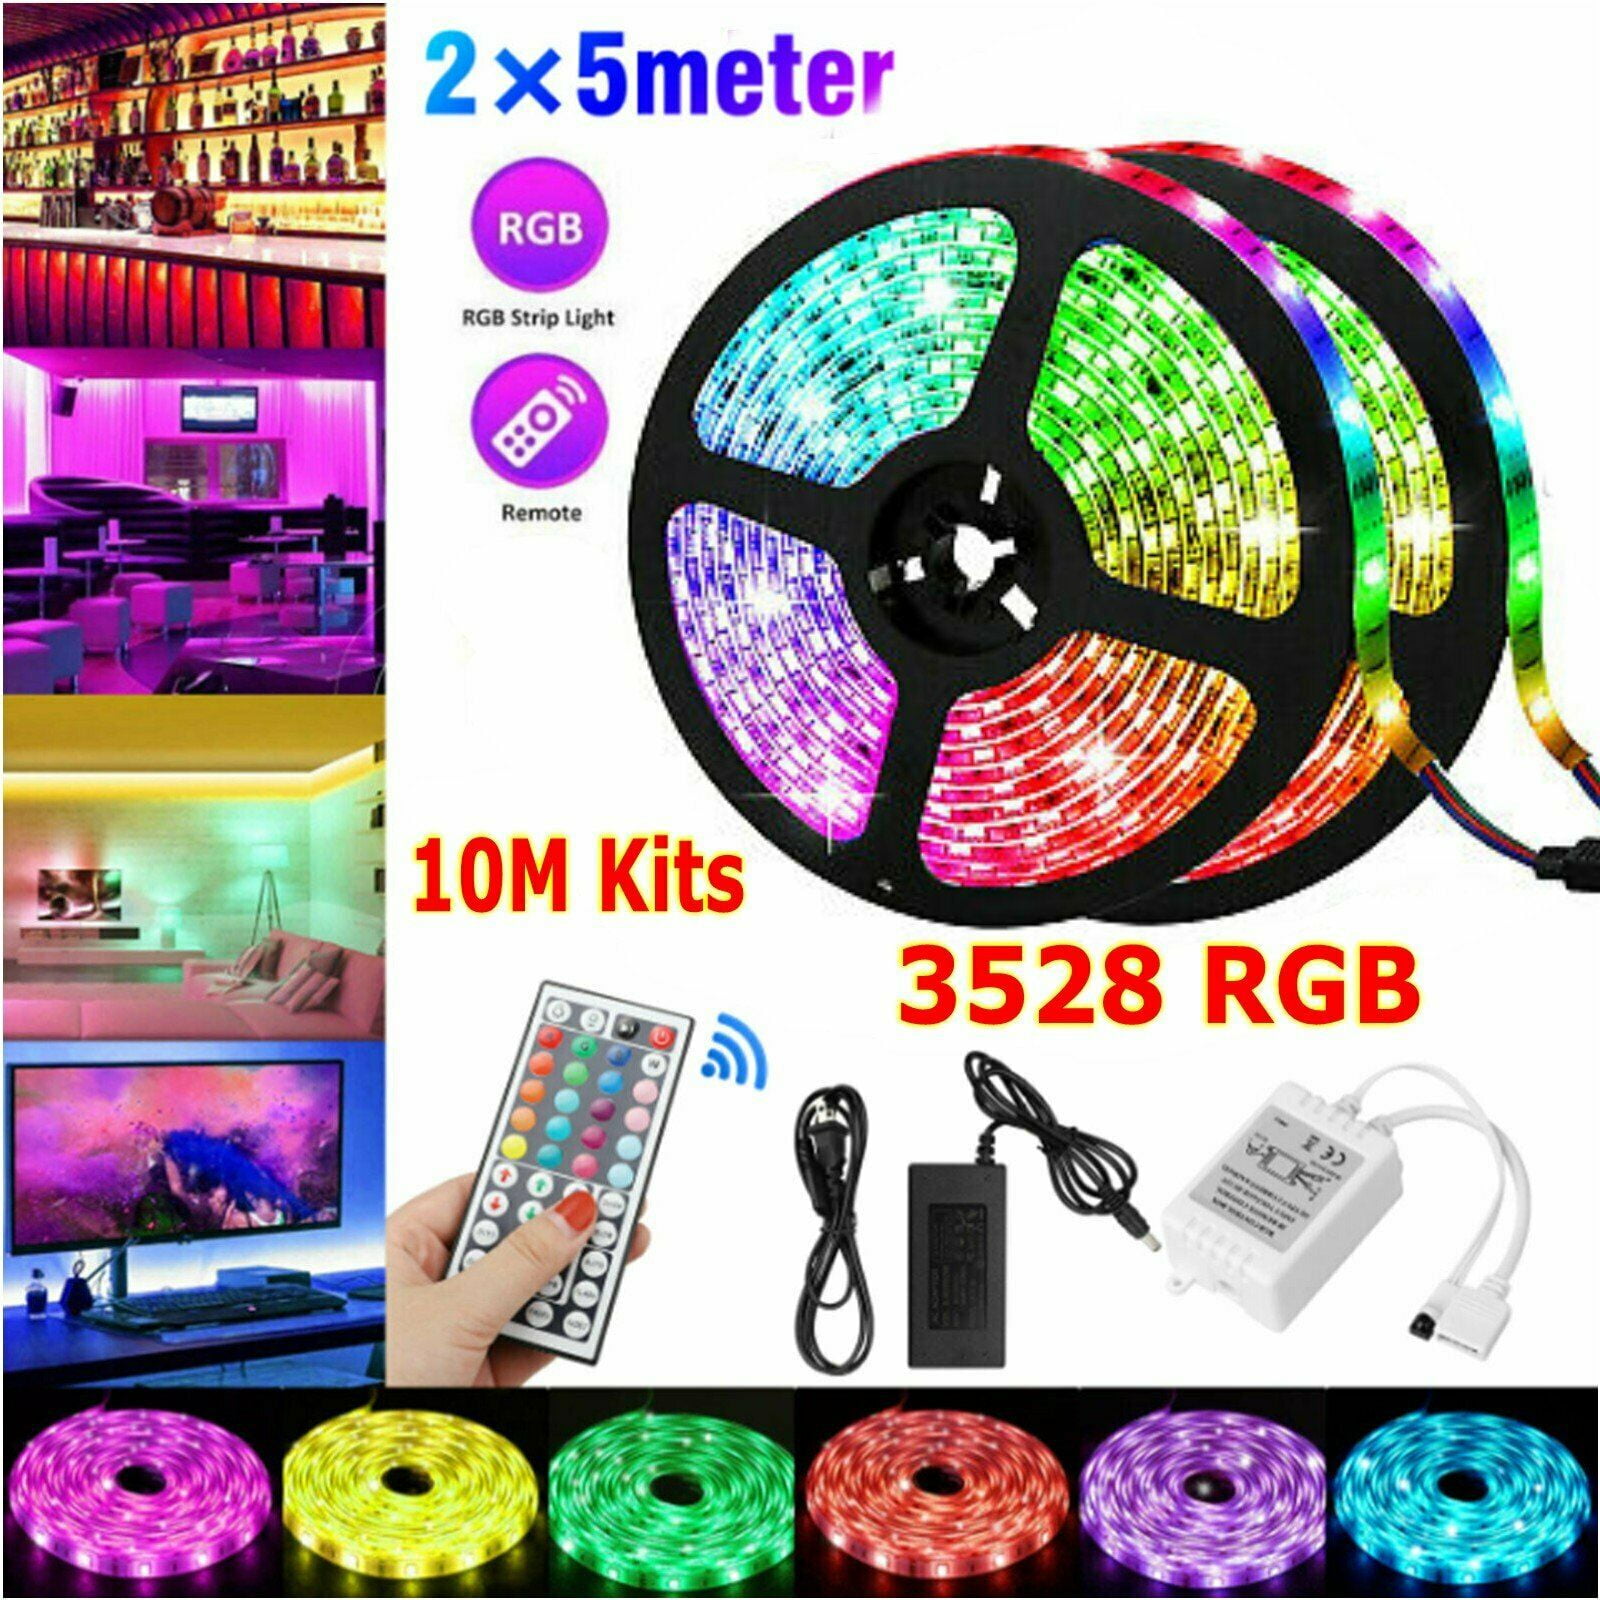 16FT RGB 3528 Waterproof LED Strip light SMD 44 Key Remote 12V US Power Full Kit 